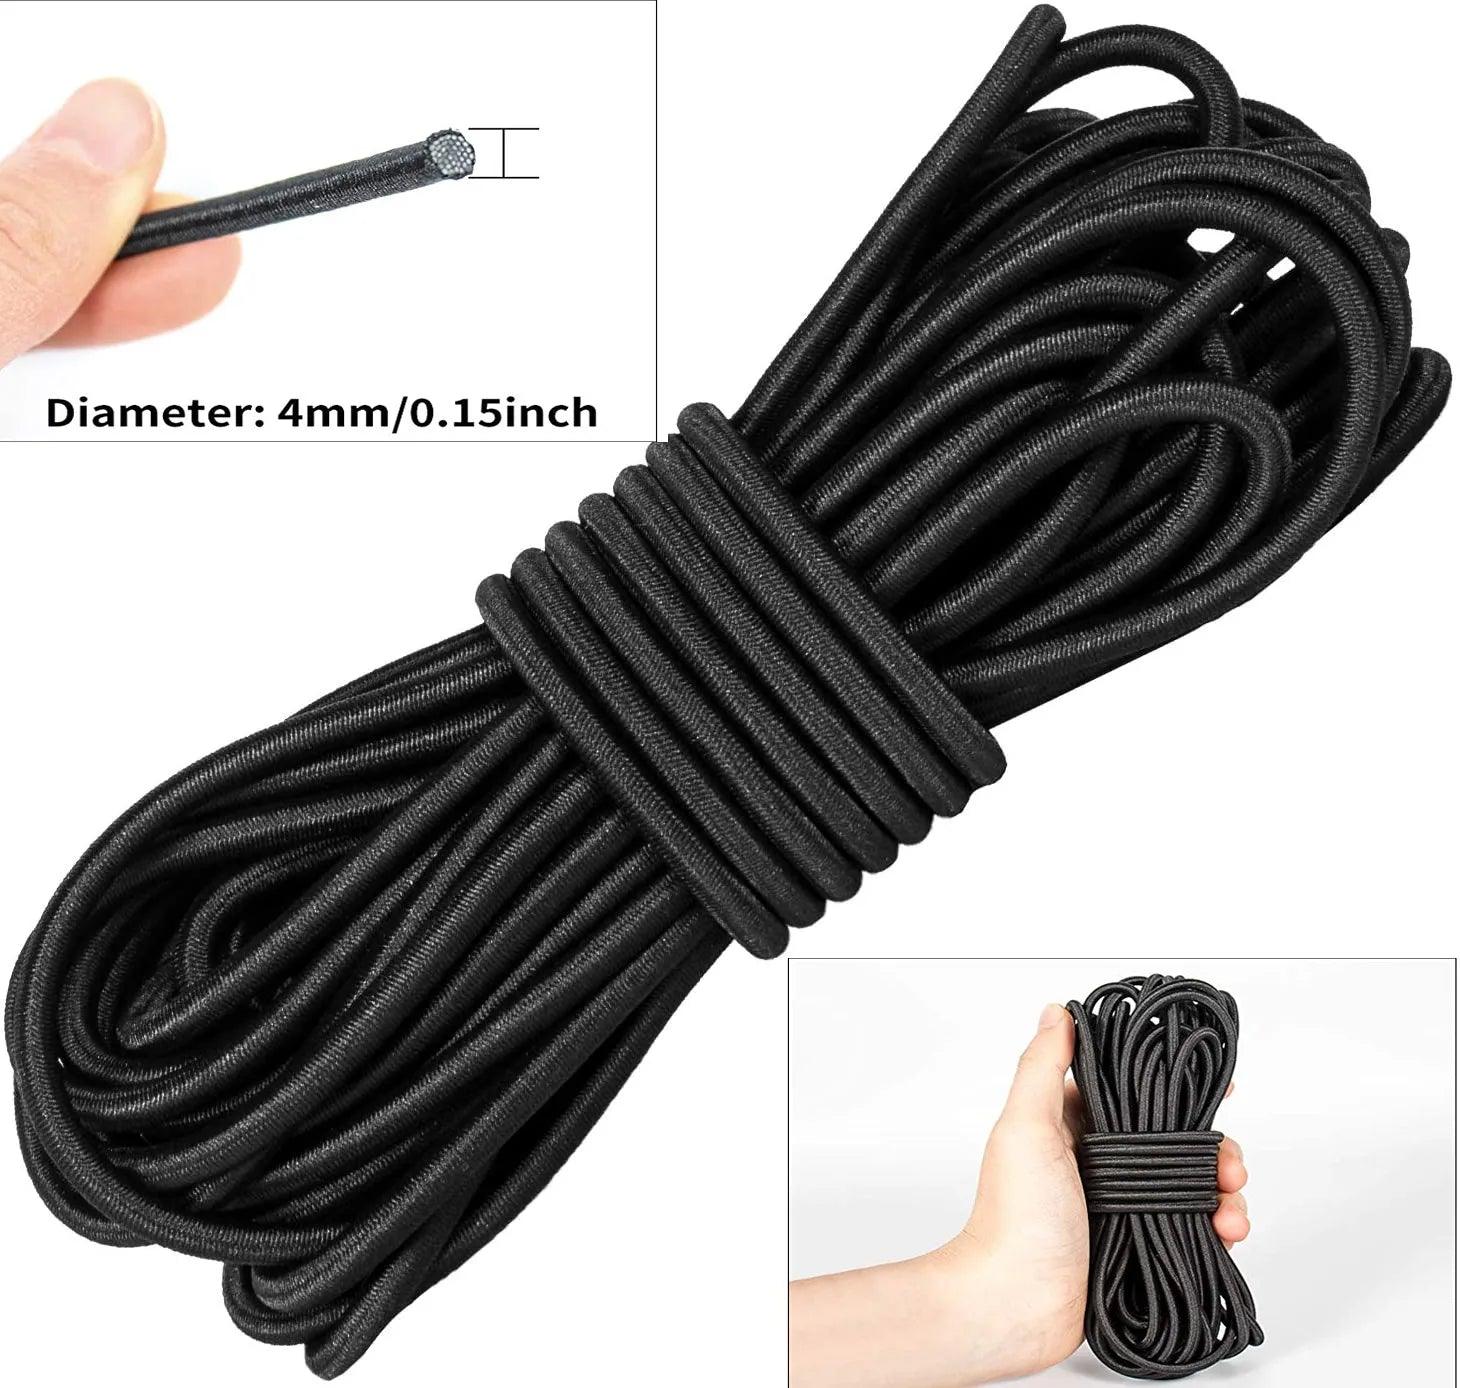 Elastic Rope Bundle - Premium White & Black Sewing Elastic with Multiple Diameter Options and Lengths  ourlum.com   